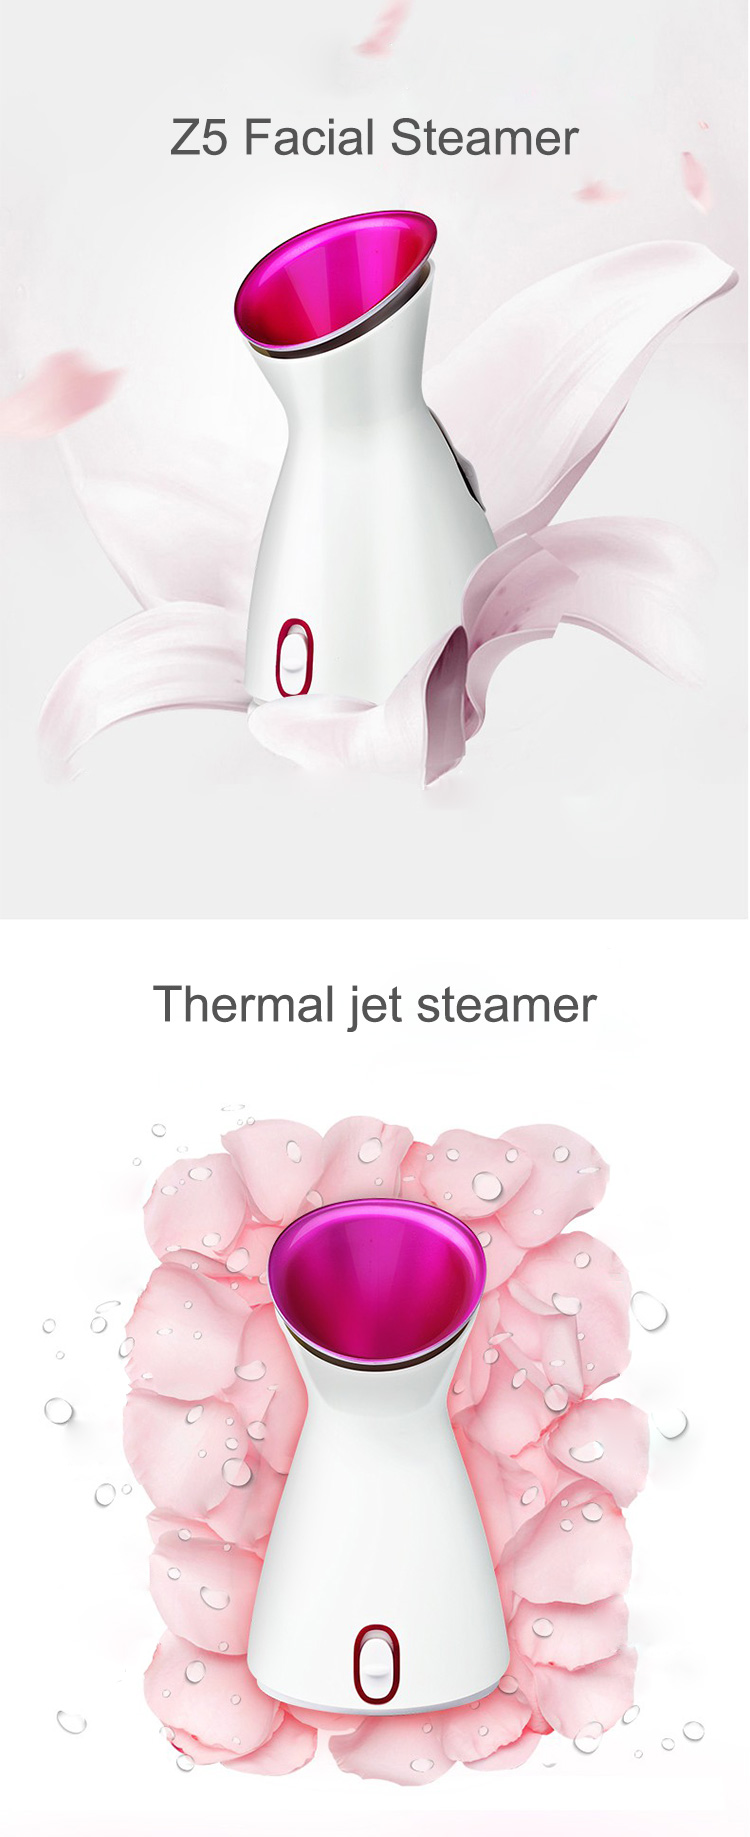 Z5 facial steamer, thermal jet steamer